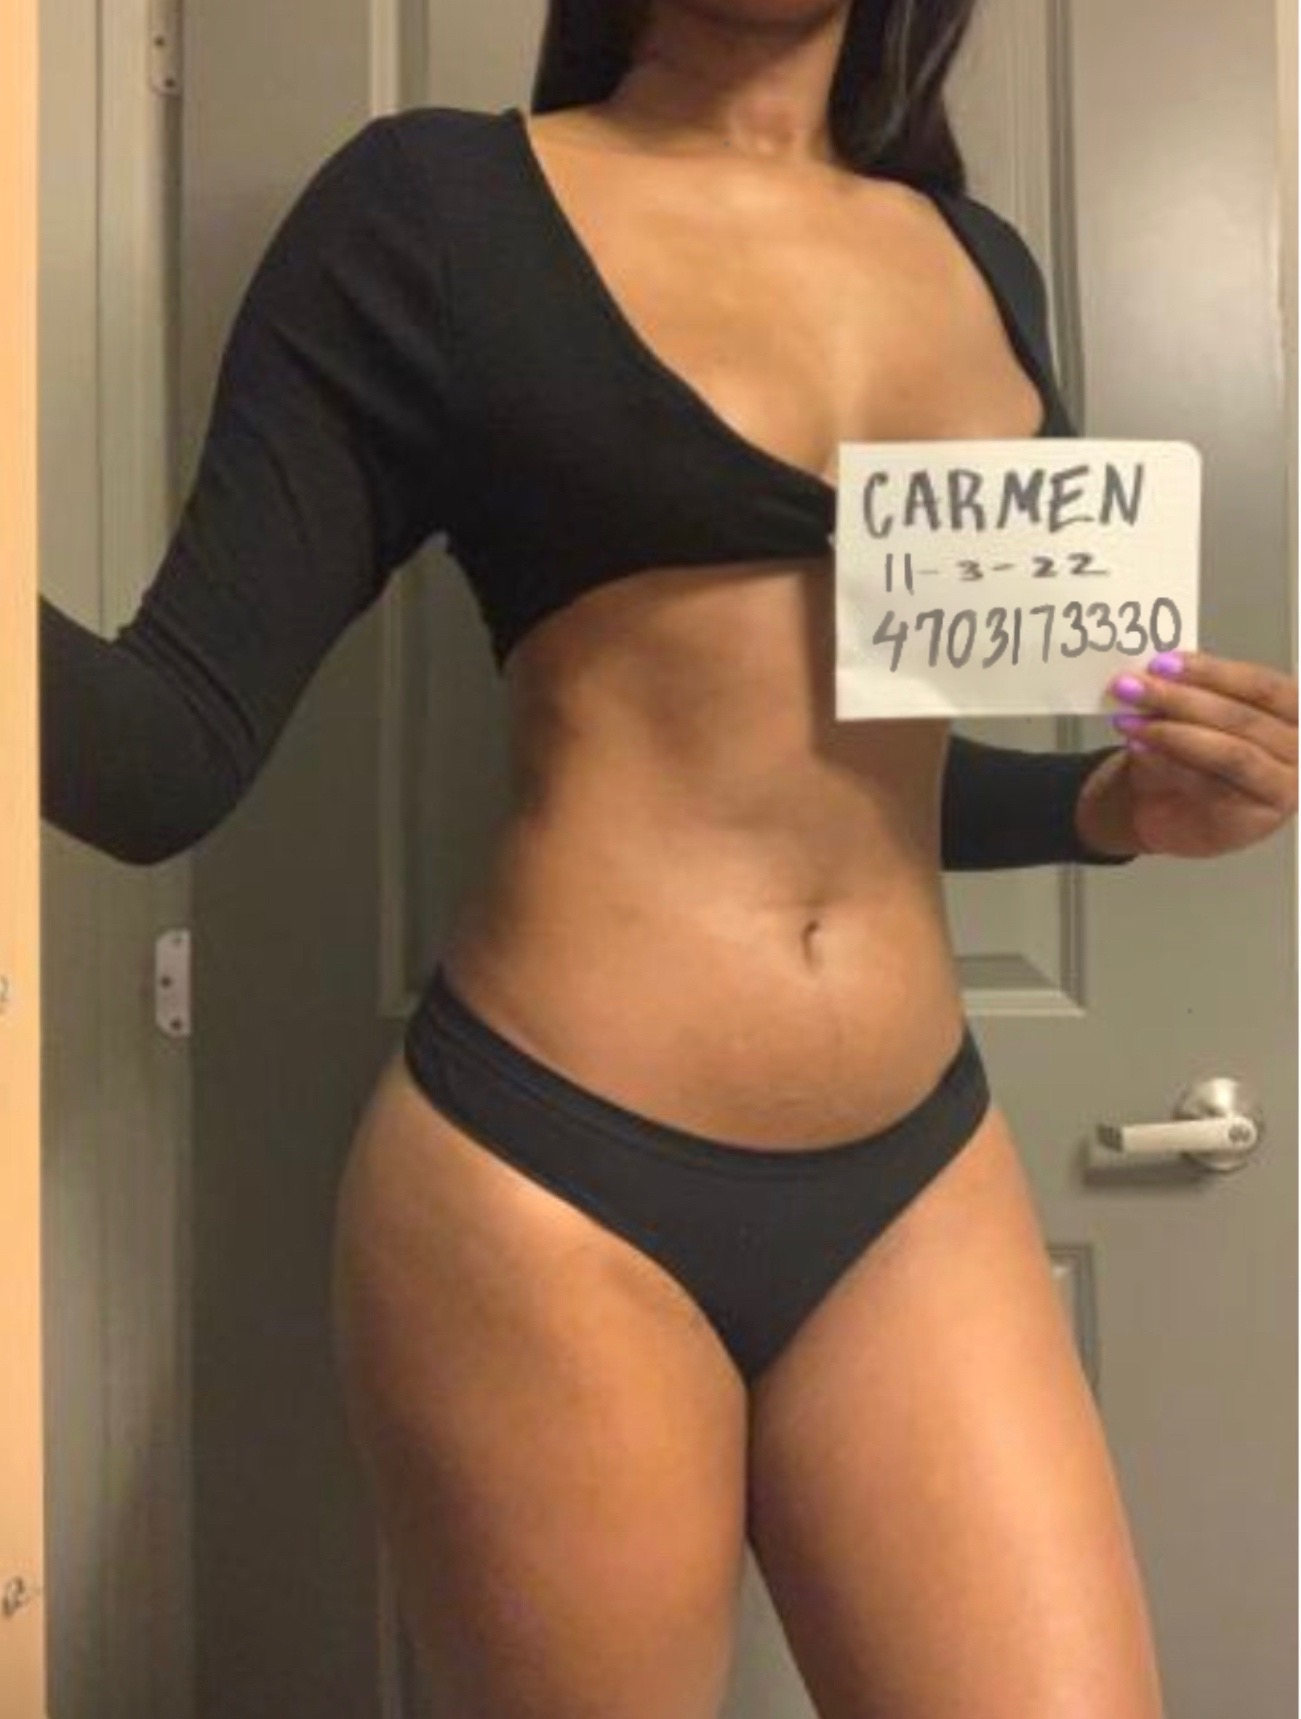 (470) 173-3330 - Hands on Carmen 🌹 in Atlanta, Georgia